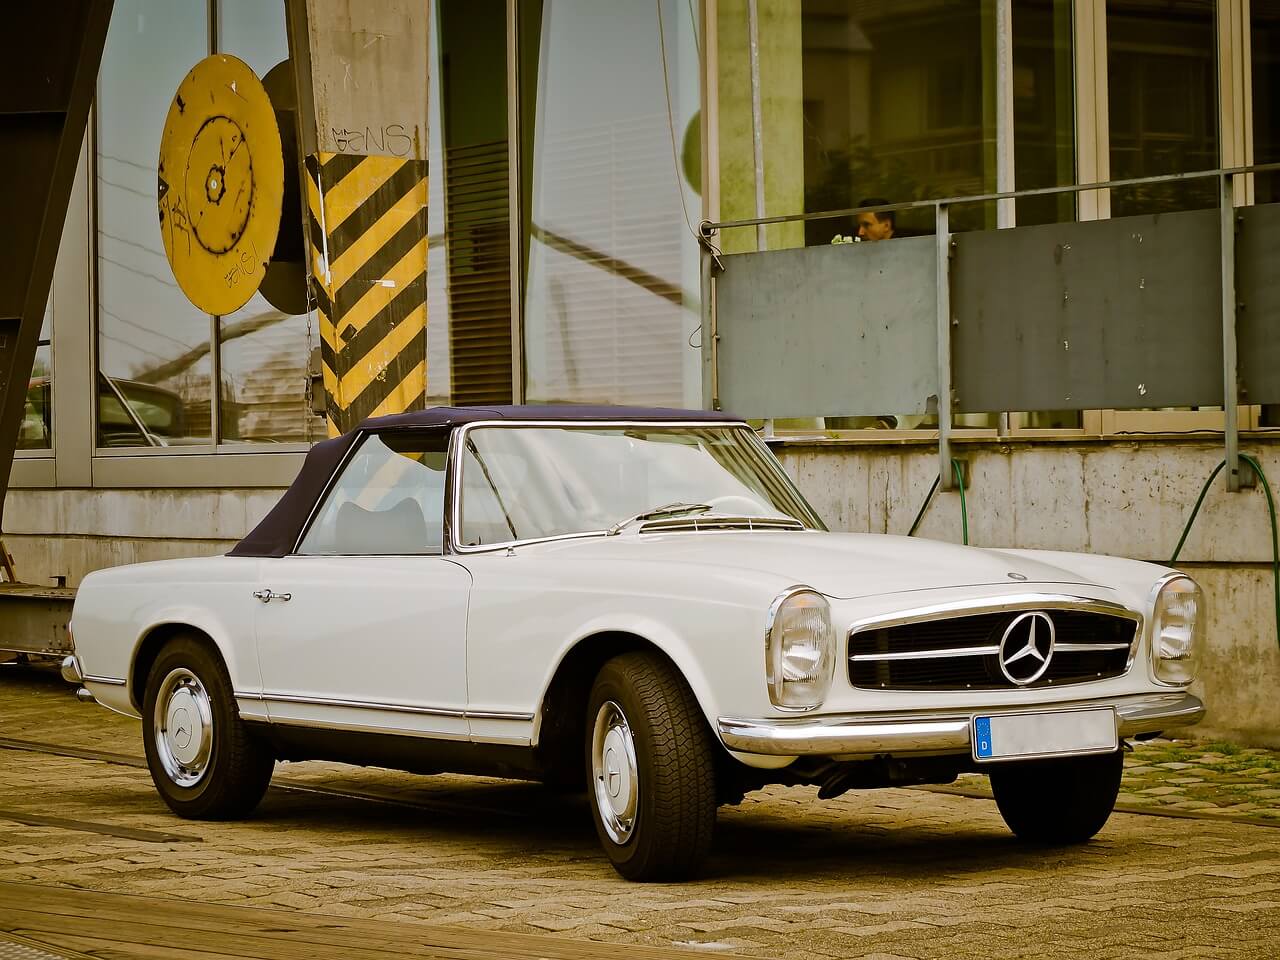 a vintage Mercedes Benz on the street